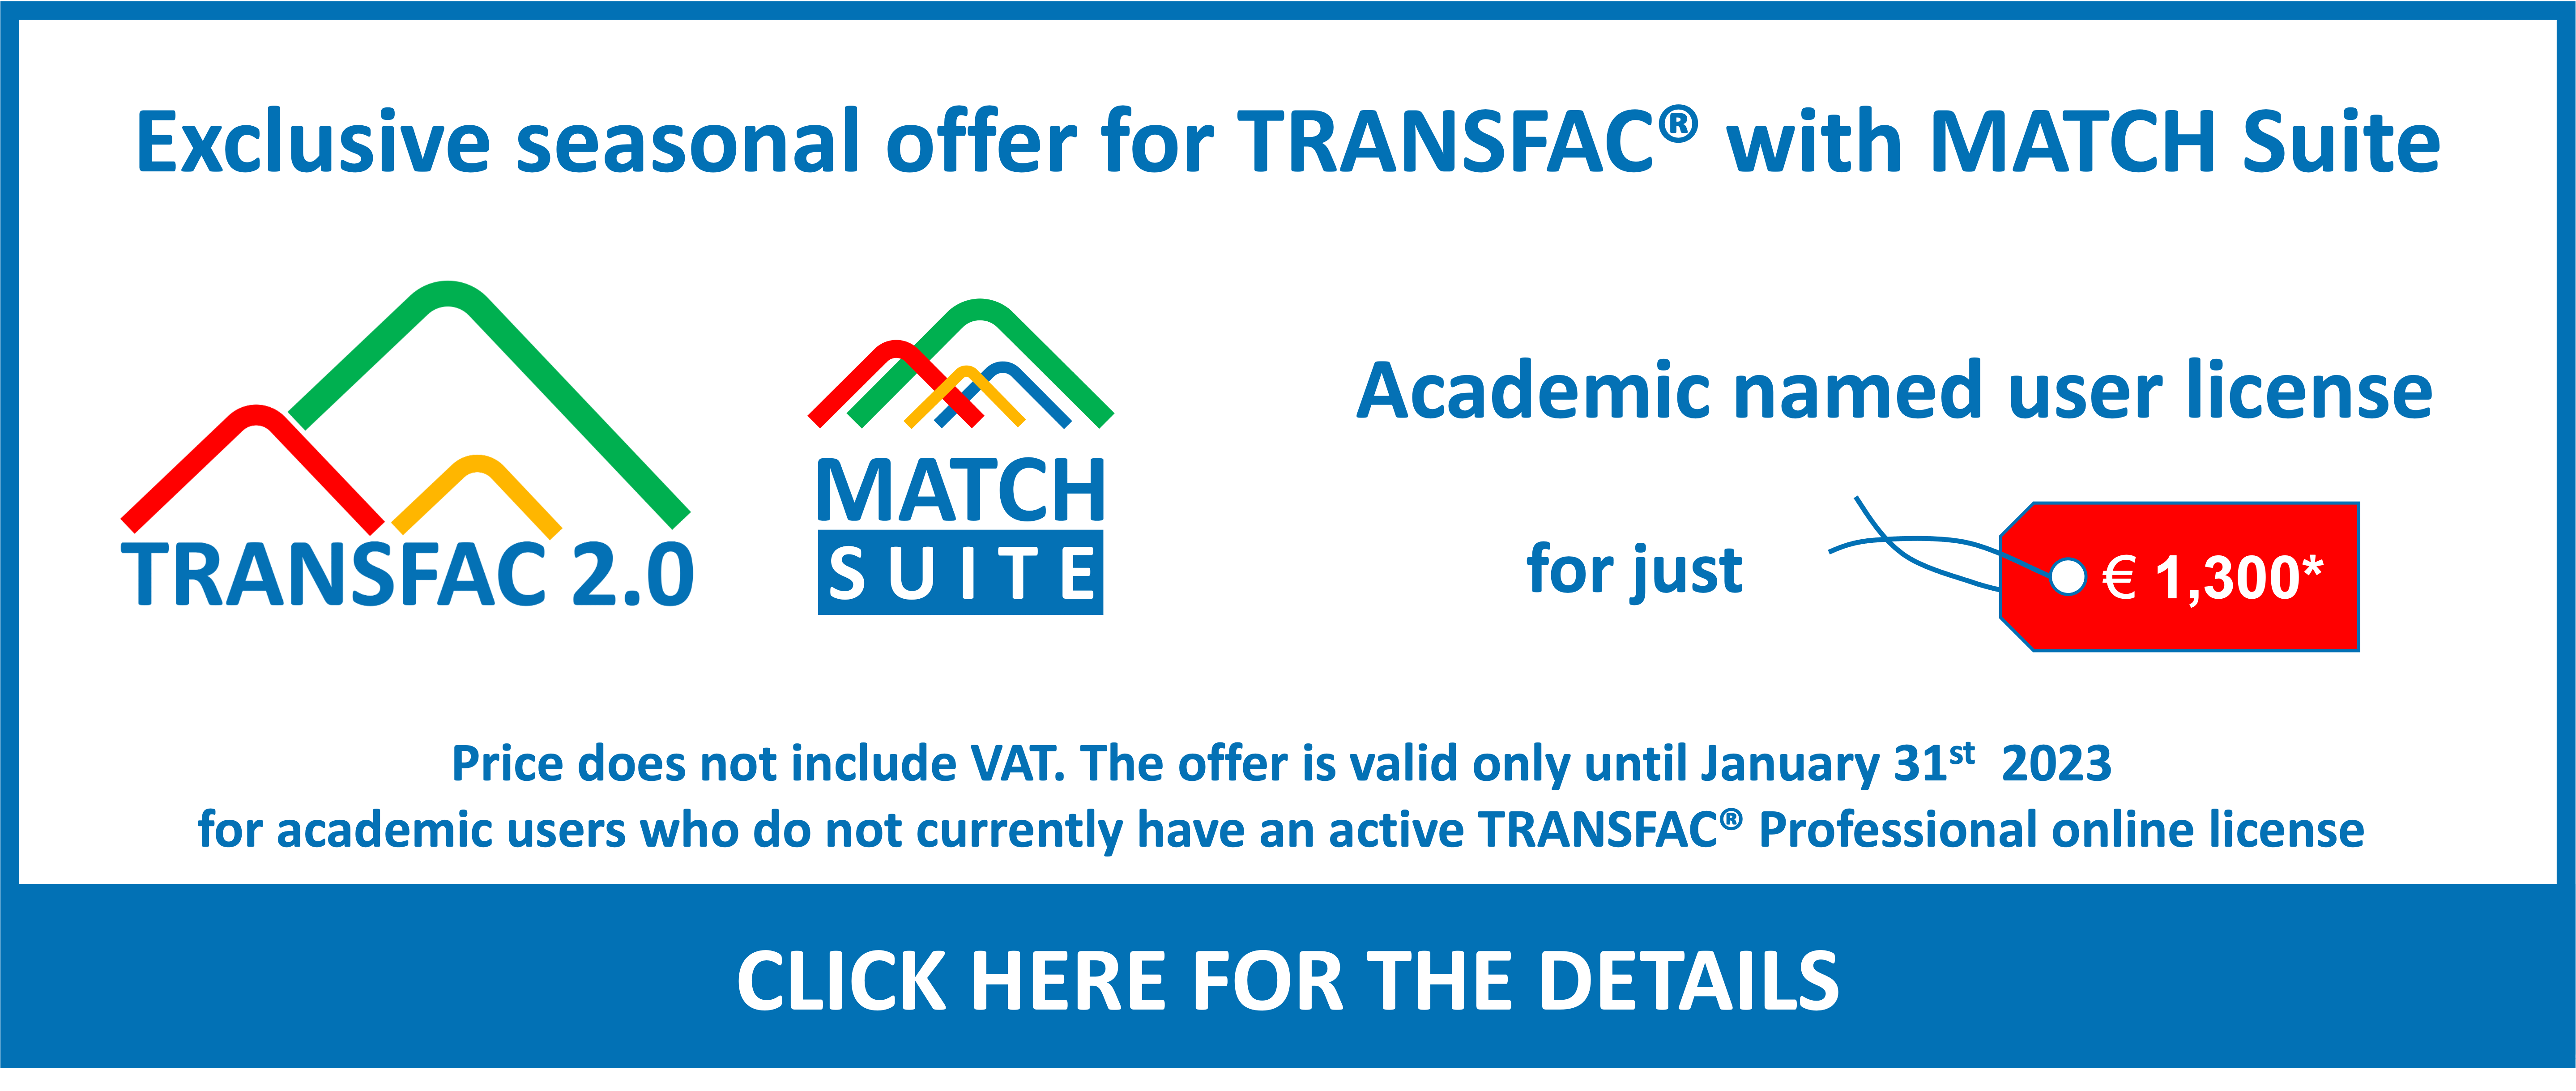 TRANSFAC seasonal offer banner